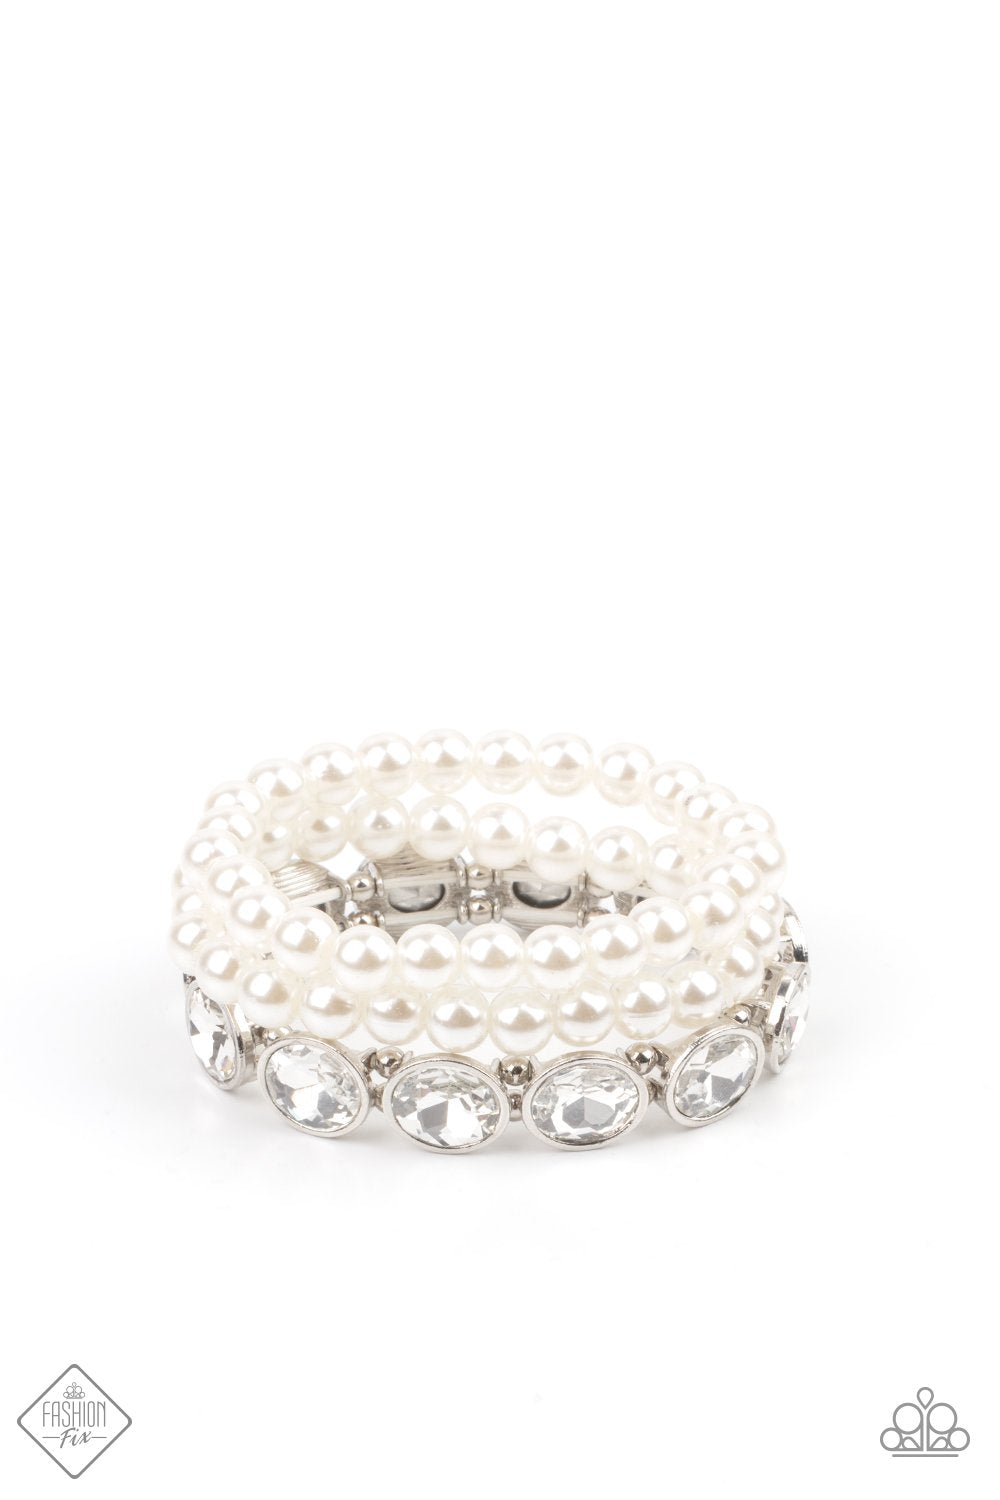 Flawlessly Flattering - White - January 2021 Paparazzi Fashion Fix Bracelet